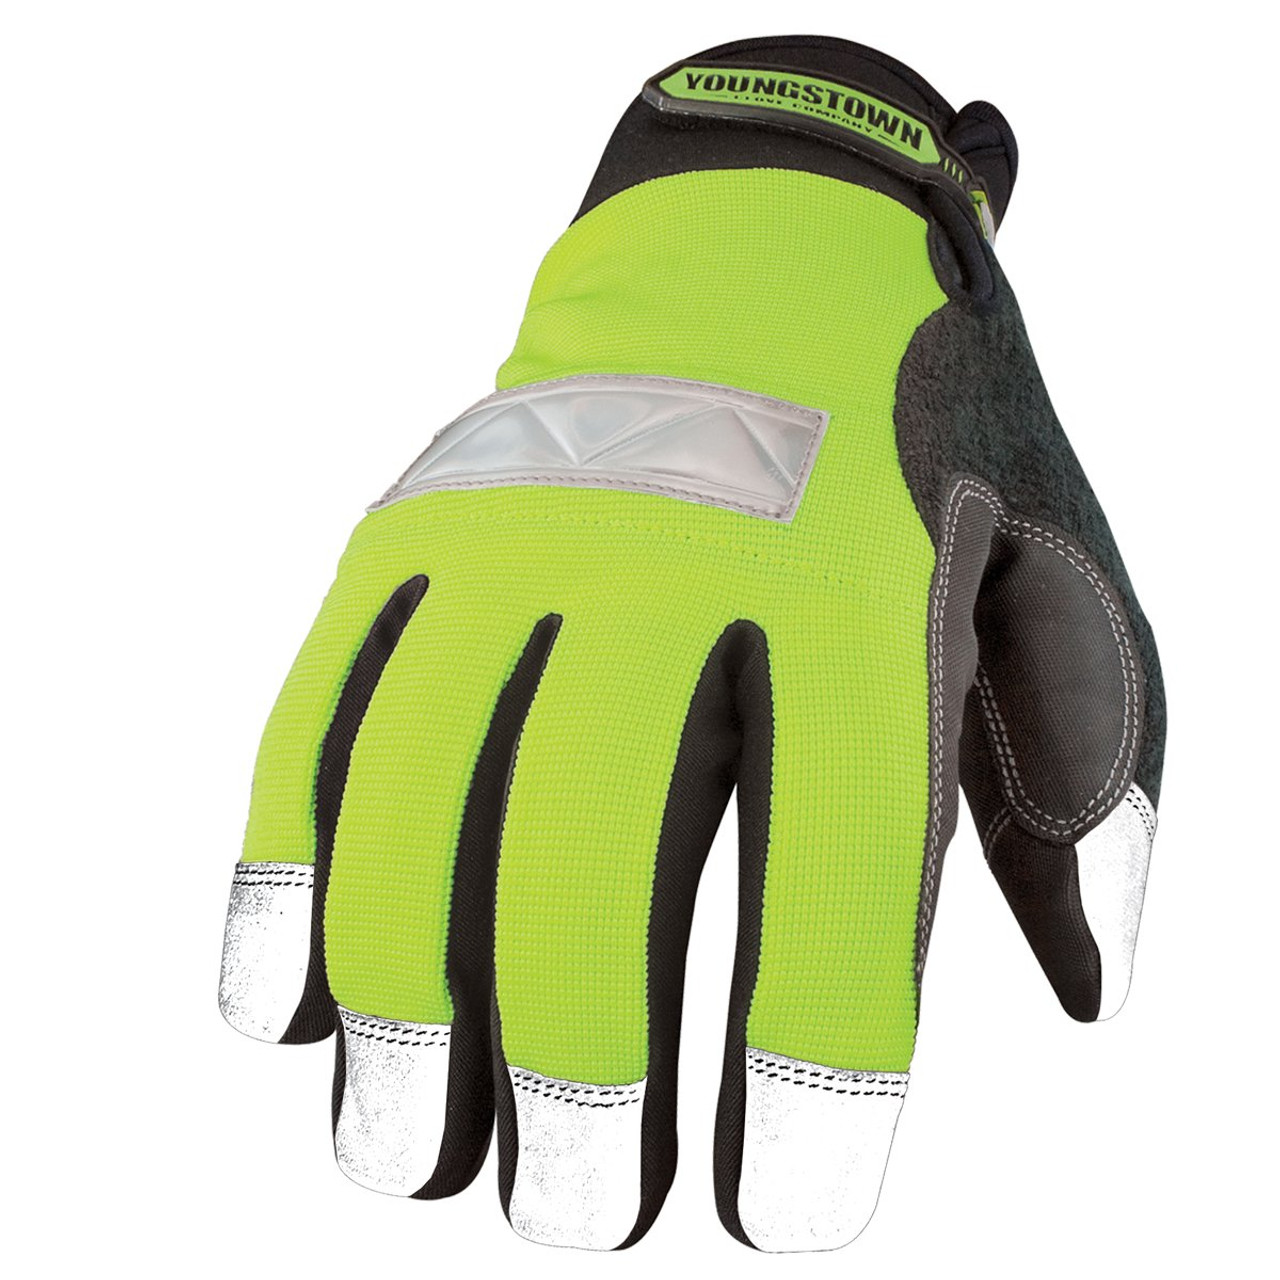 Youngstown Glove, 06-3020-60-L Mechanics Glove